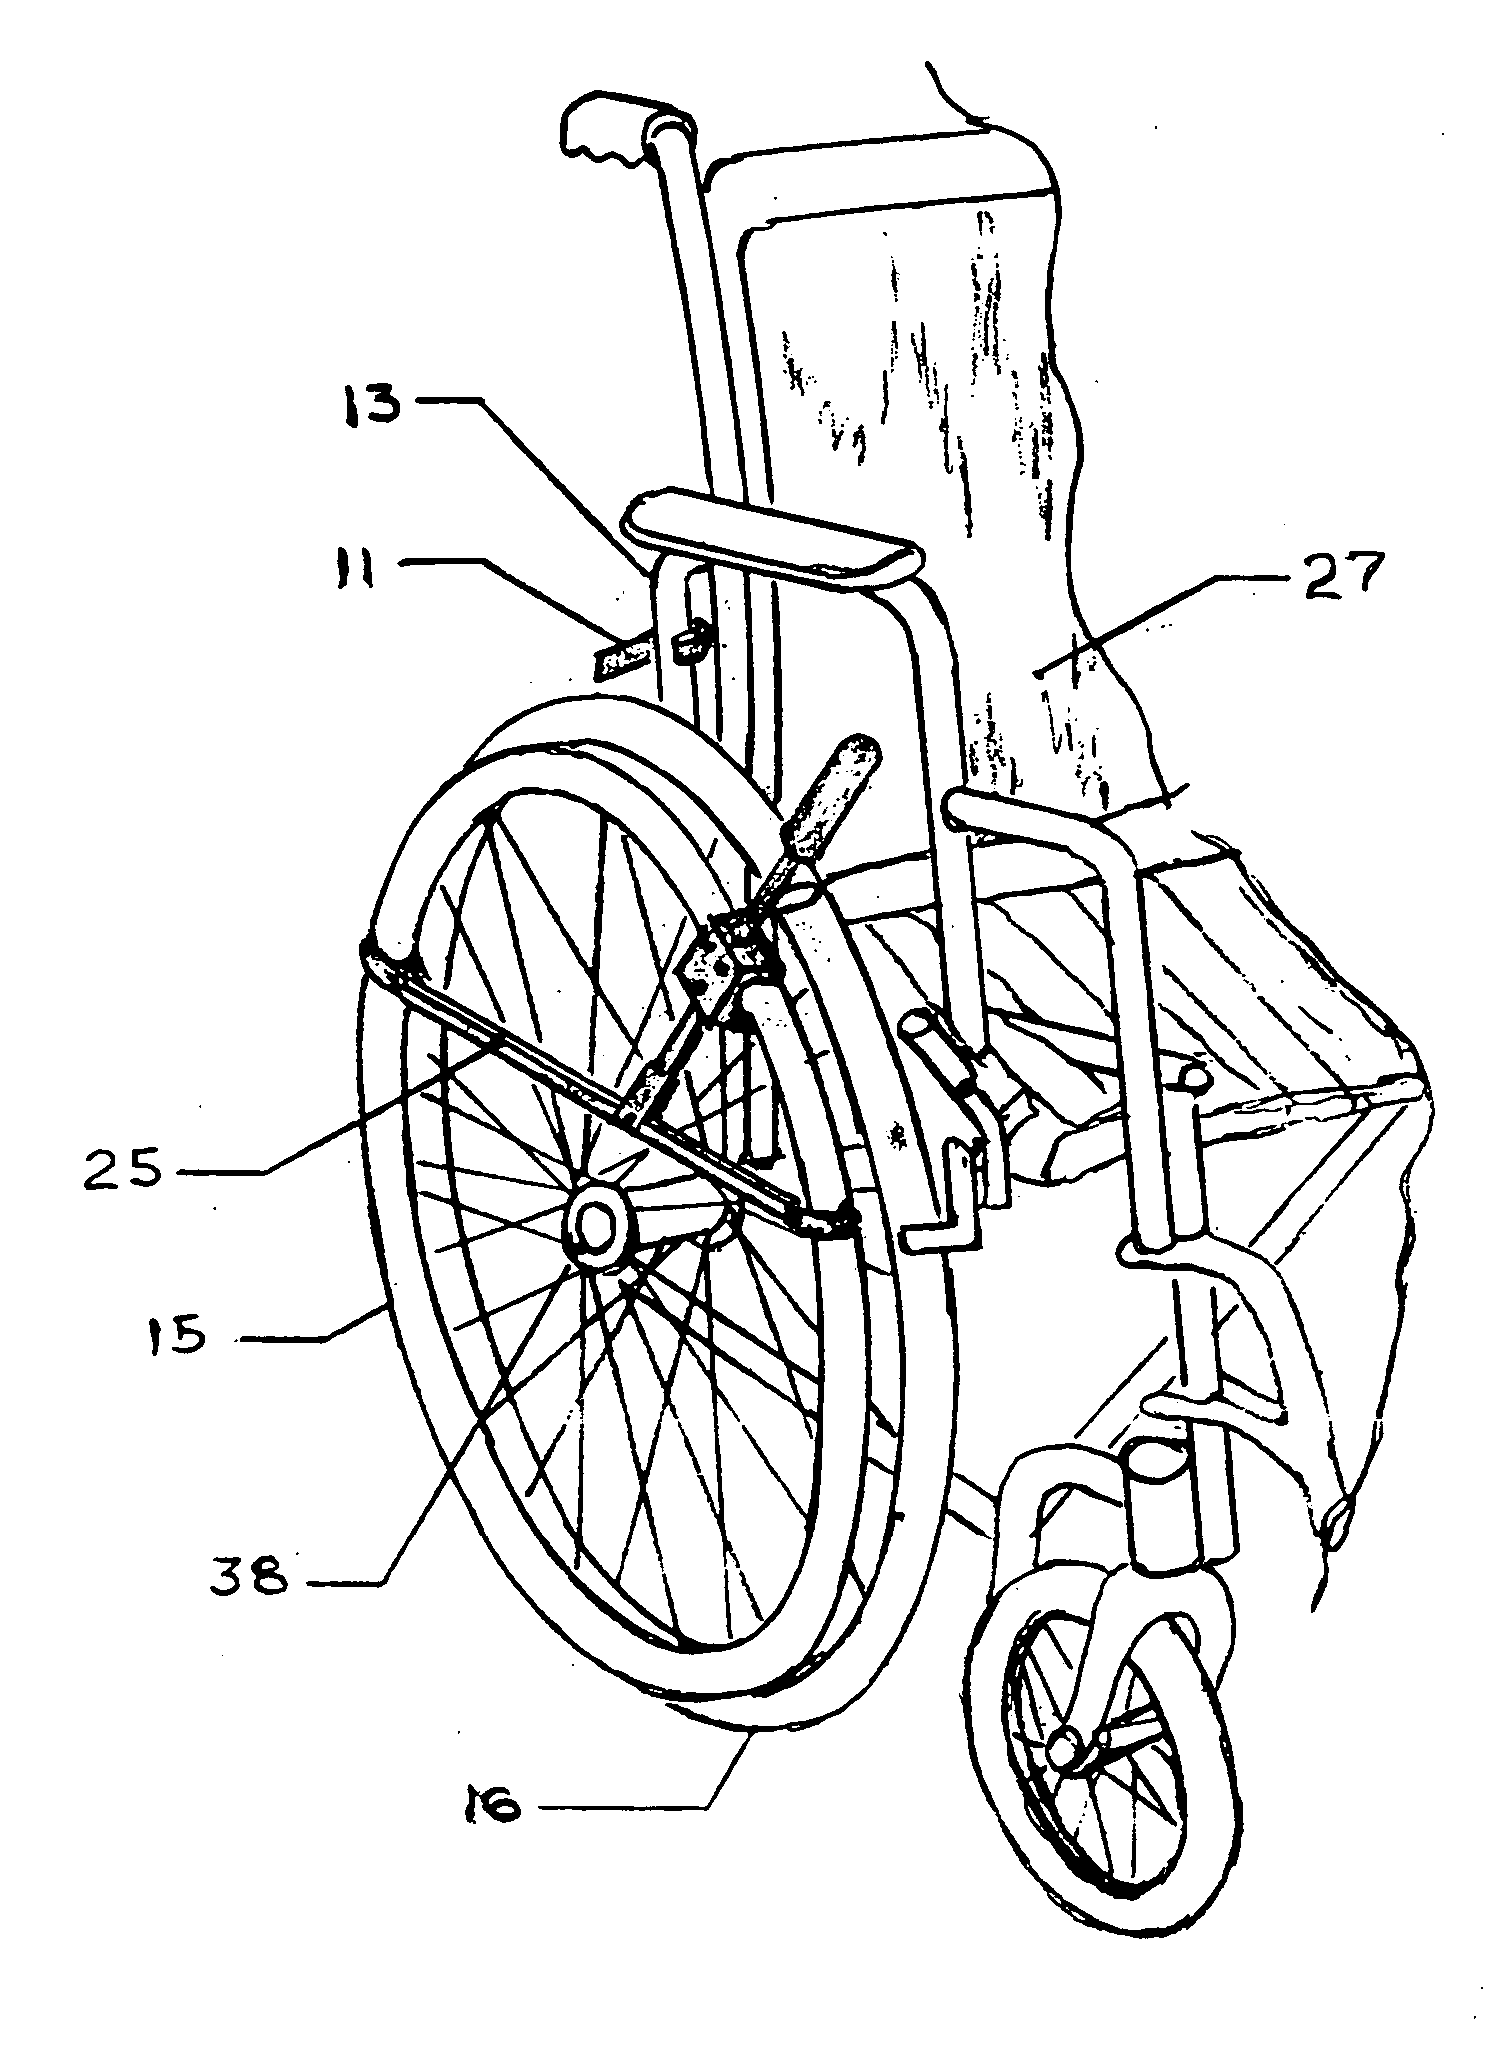 Wheelchair propulsion device